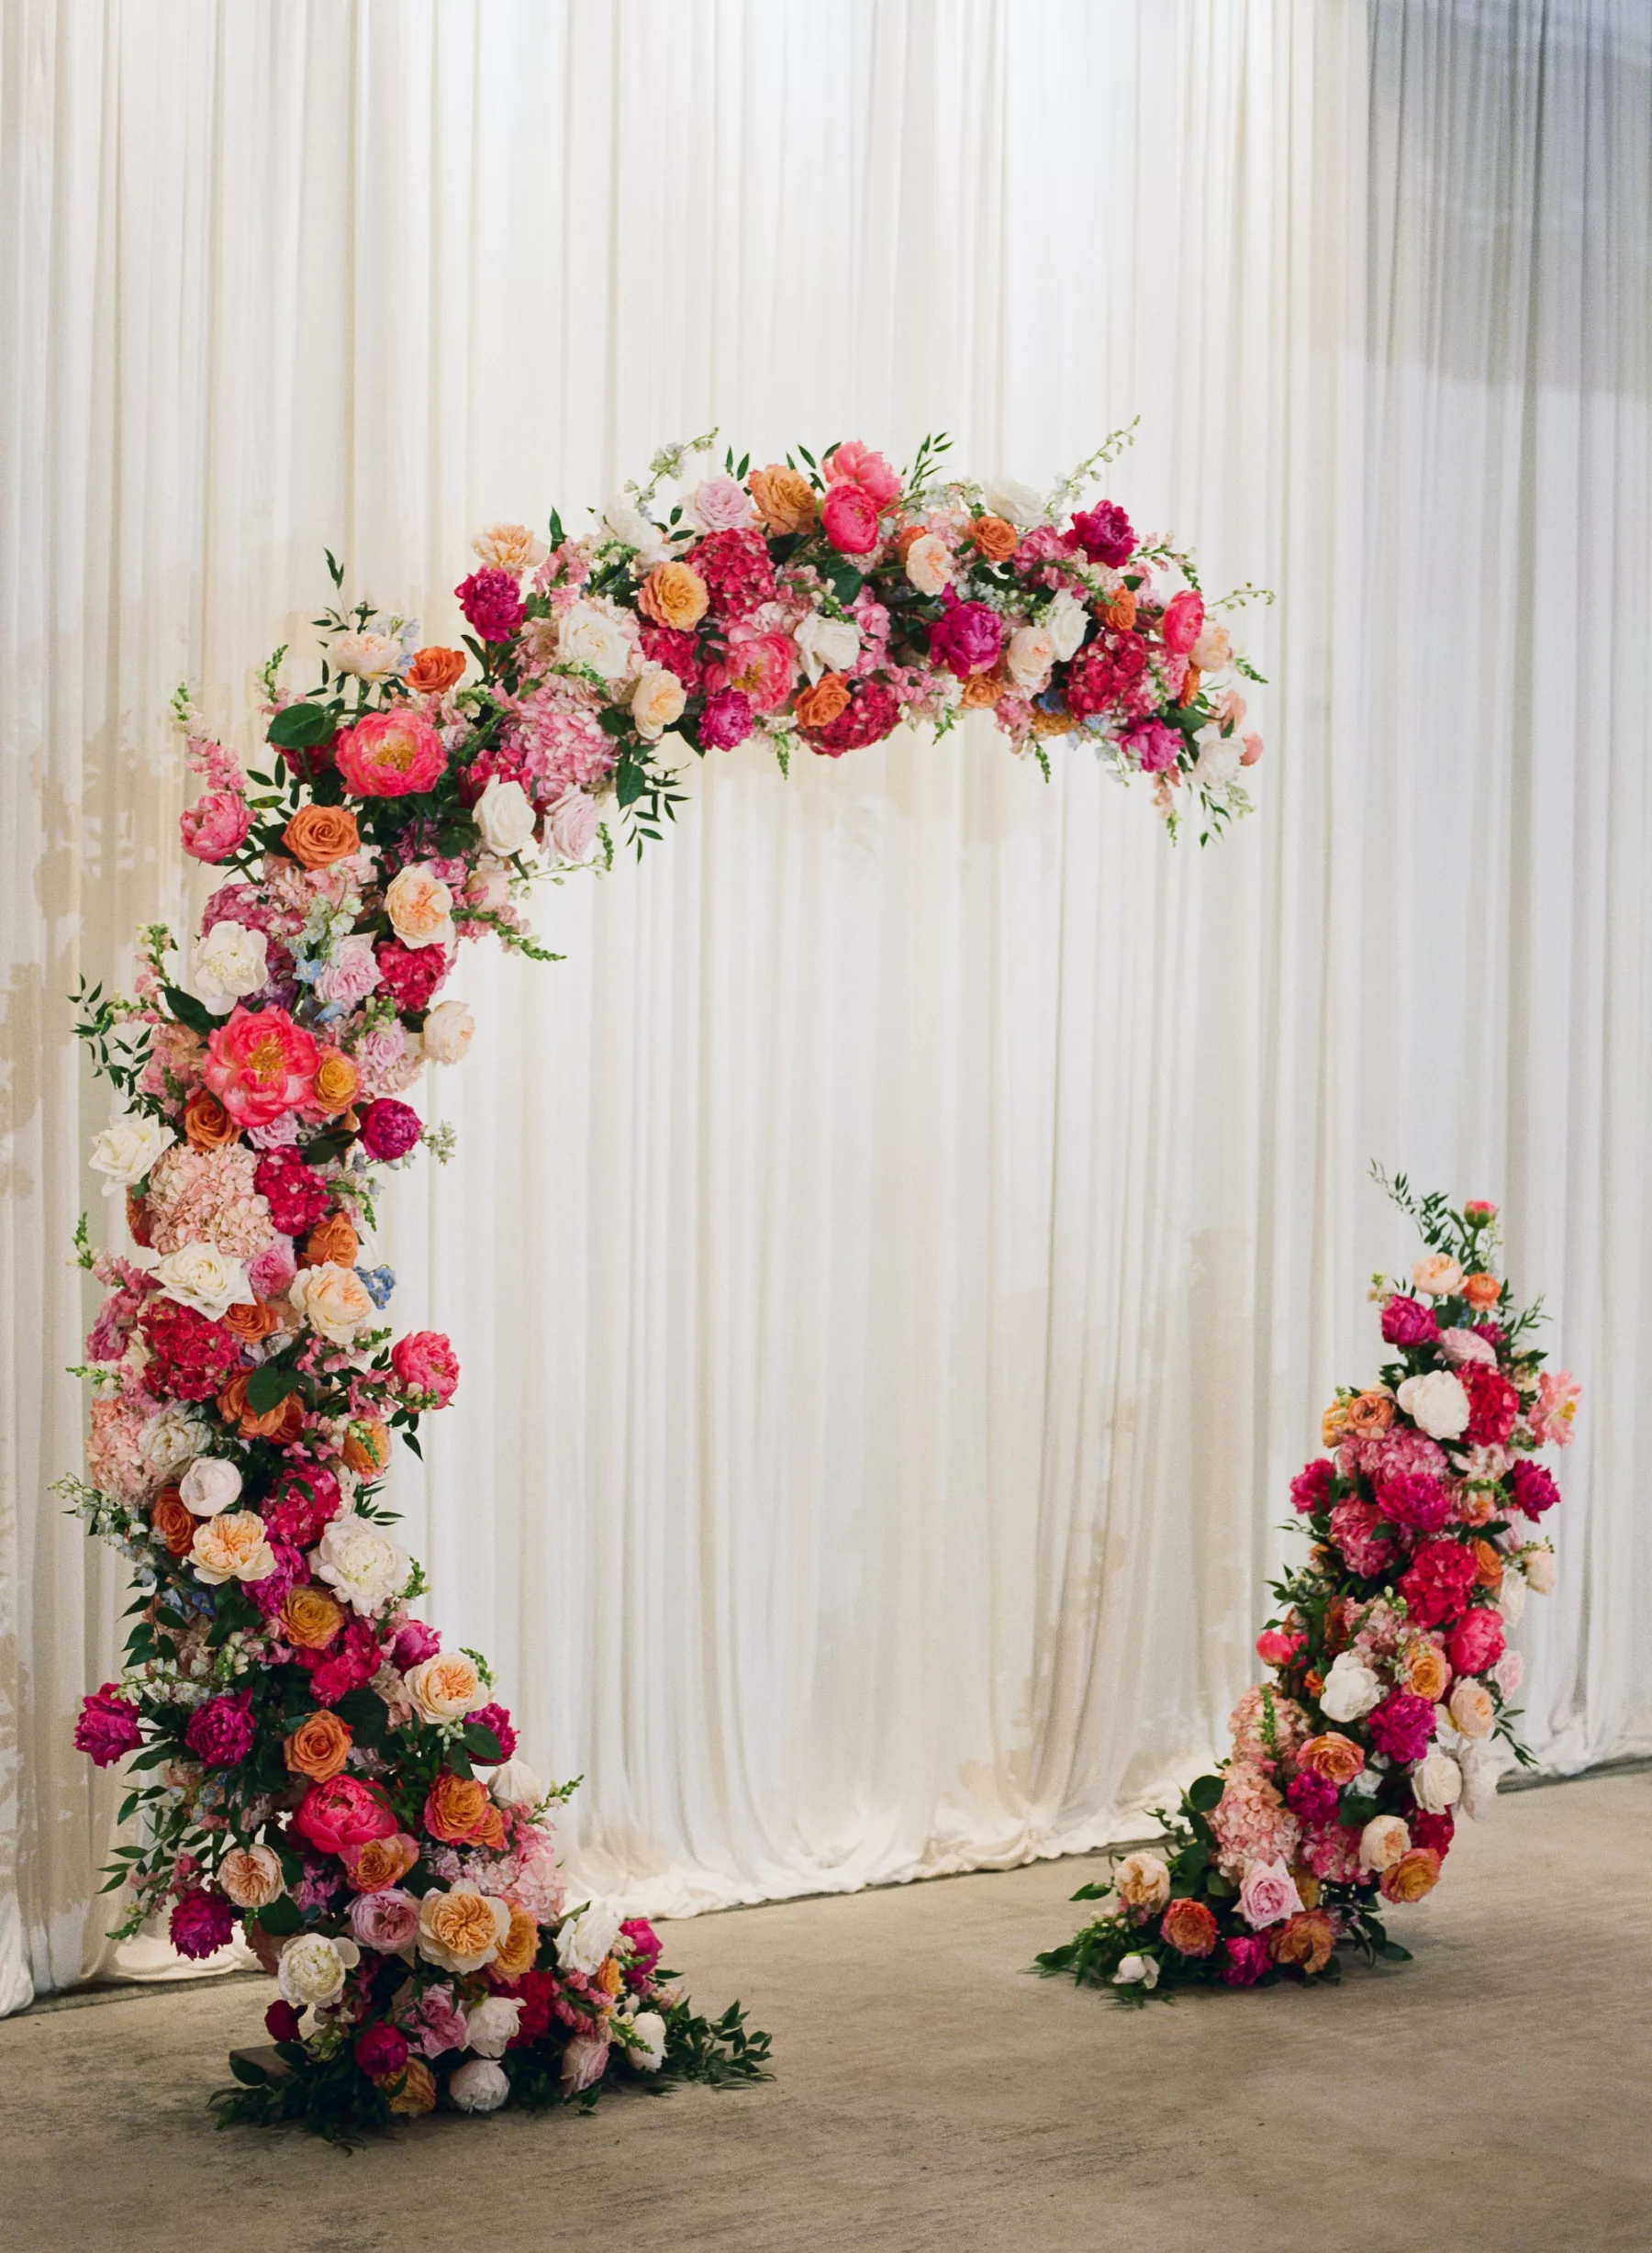 Round Wedding Ceremony Arch Inspiration with Pink Hydrangeas and Orange Garden Roses | Tampa Bay Florist Bruce Wayne Florals